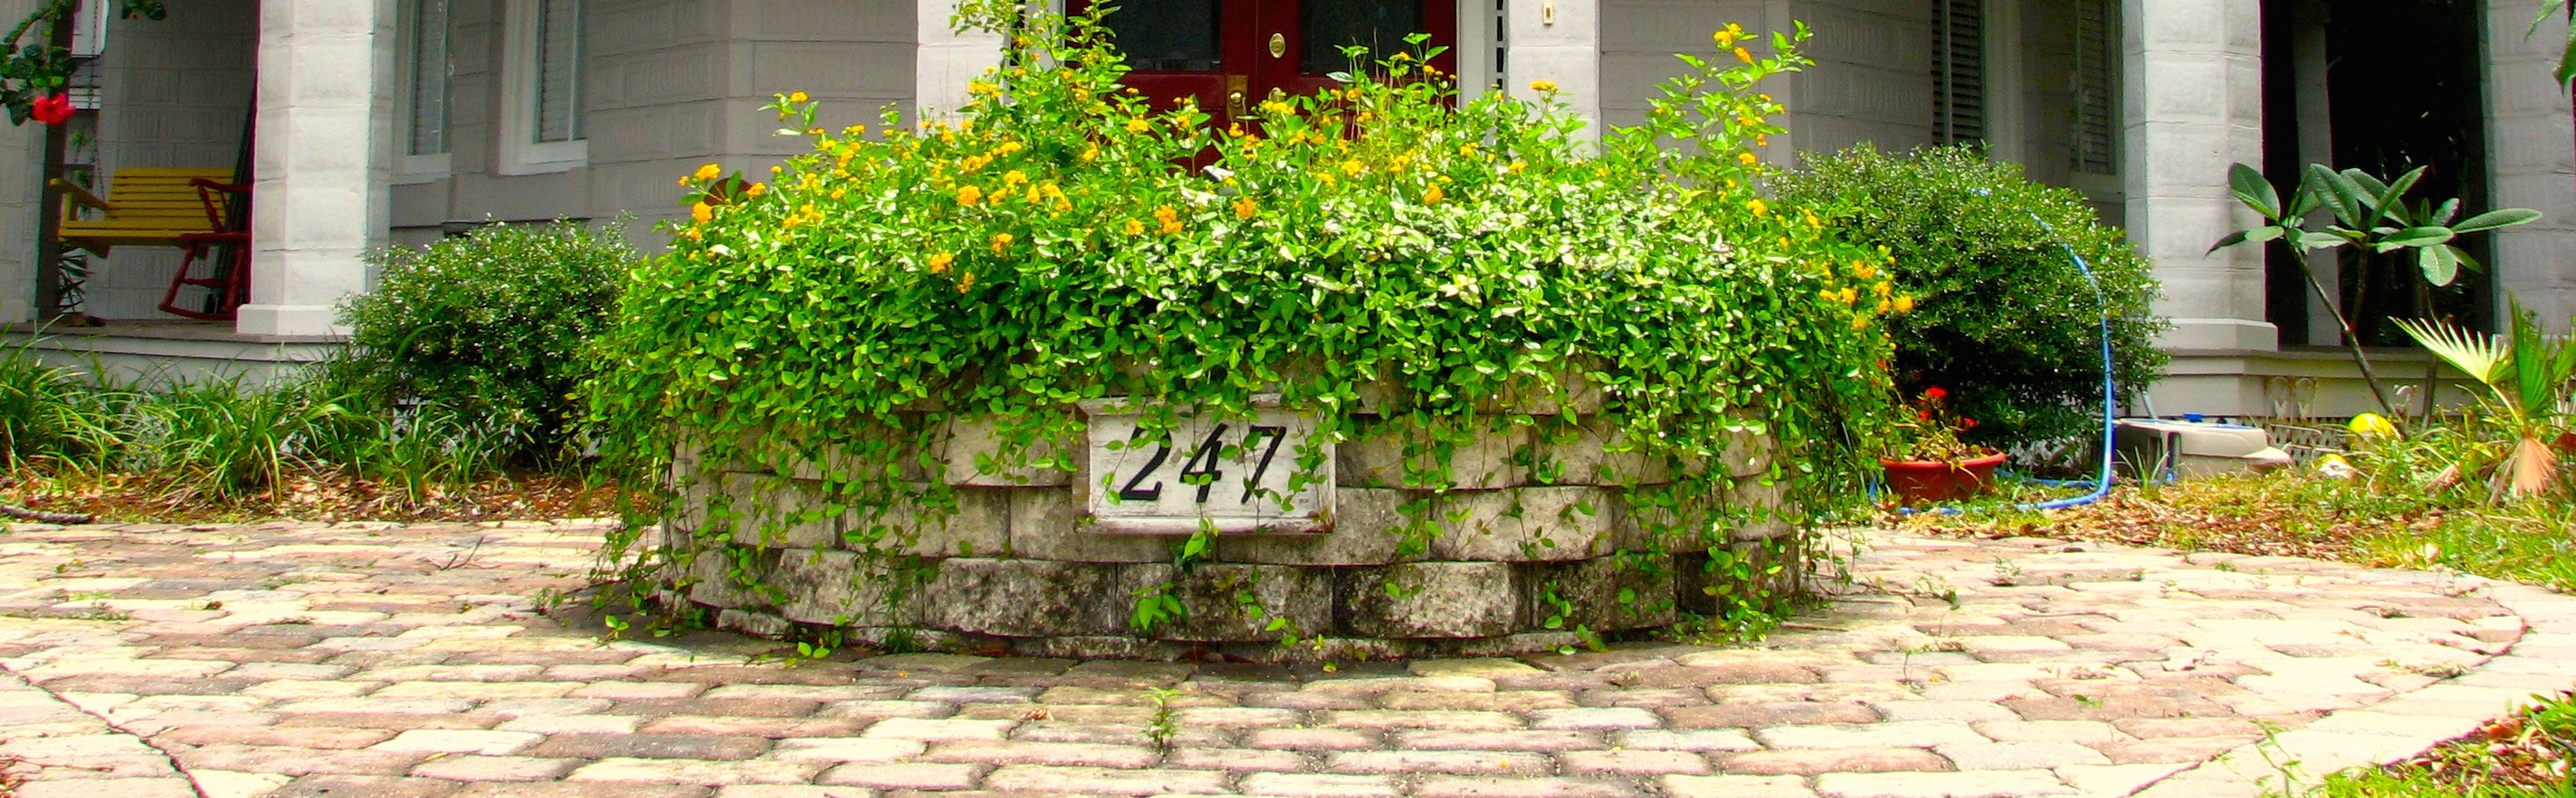 House number address 